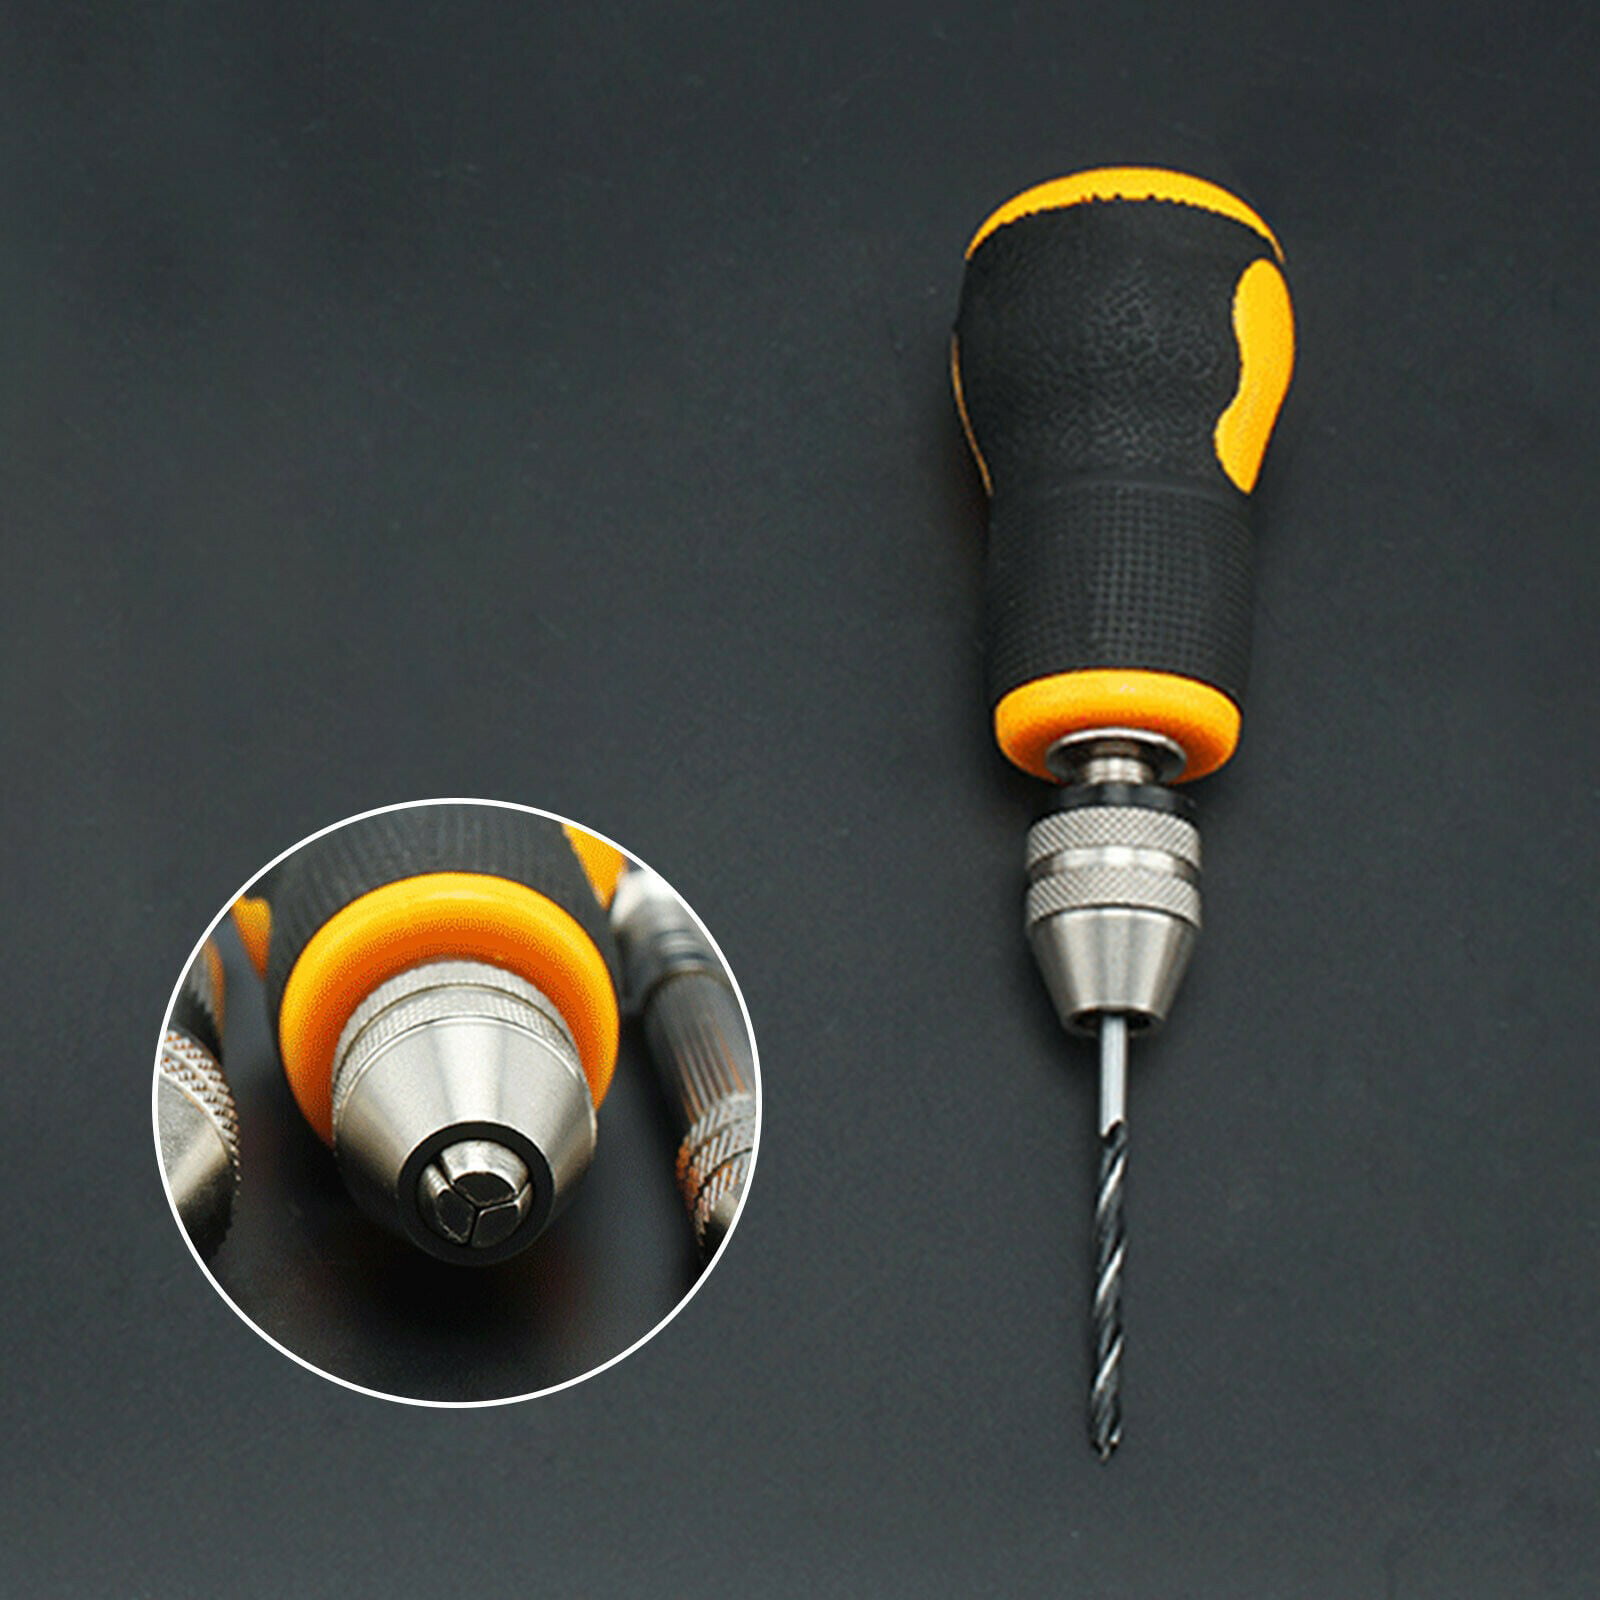 Ruibeauty Portable Micro Mini Tiny Hand Drill+10pcs Drill Bits 0.5-3.2mm  DIY Tool 